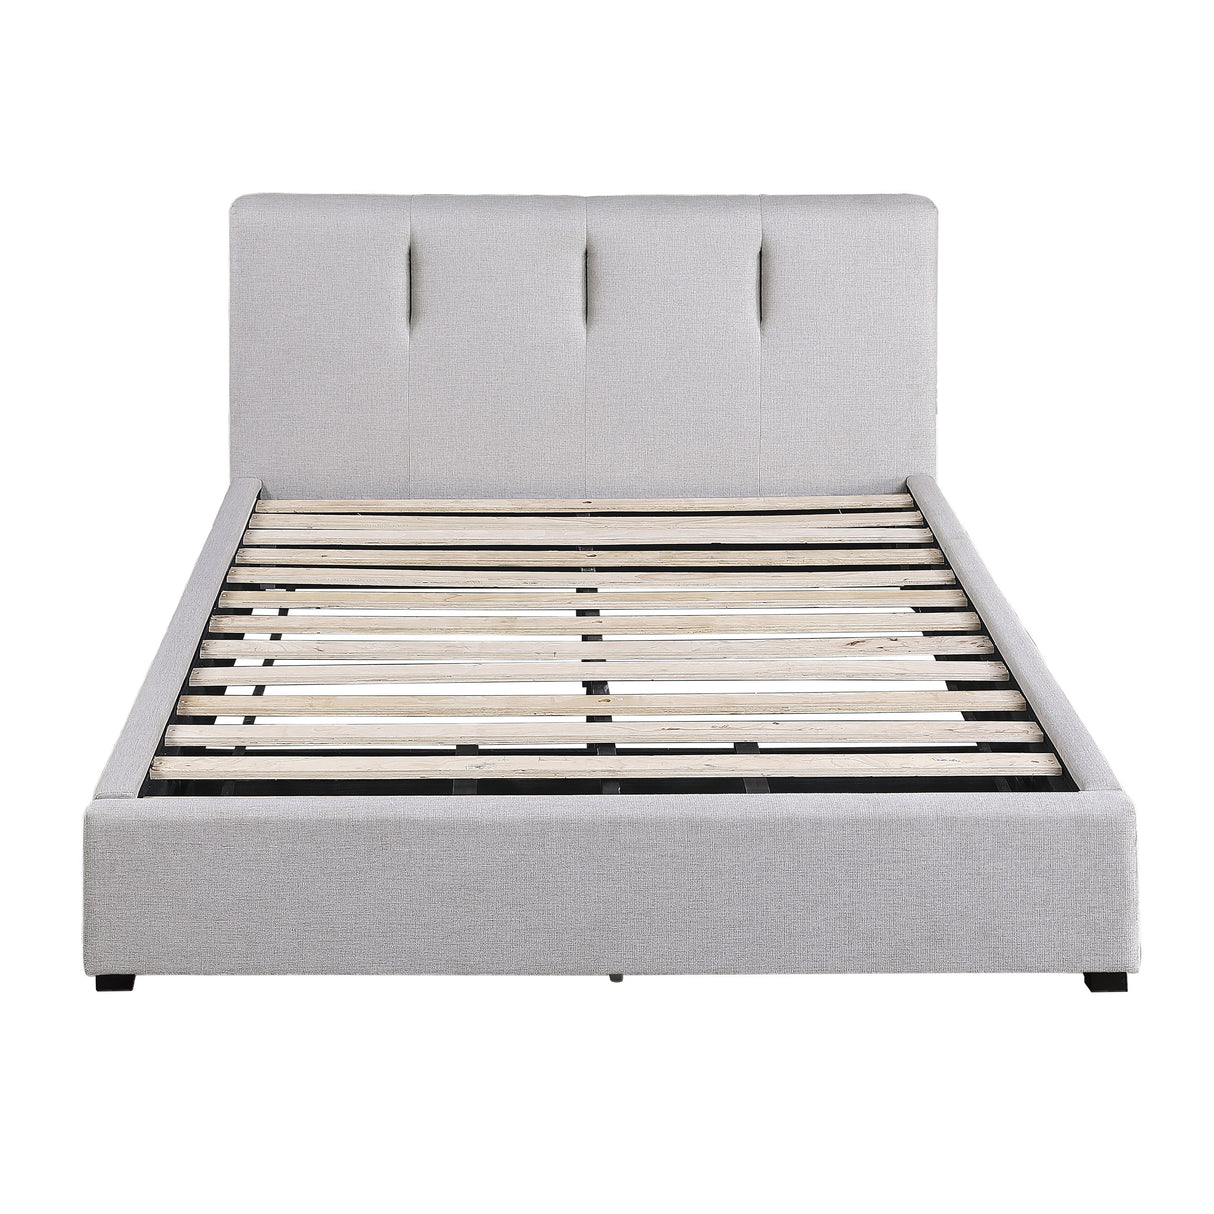 Aitana Full Platform Bed With Storage Drawer